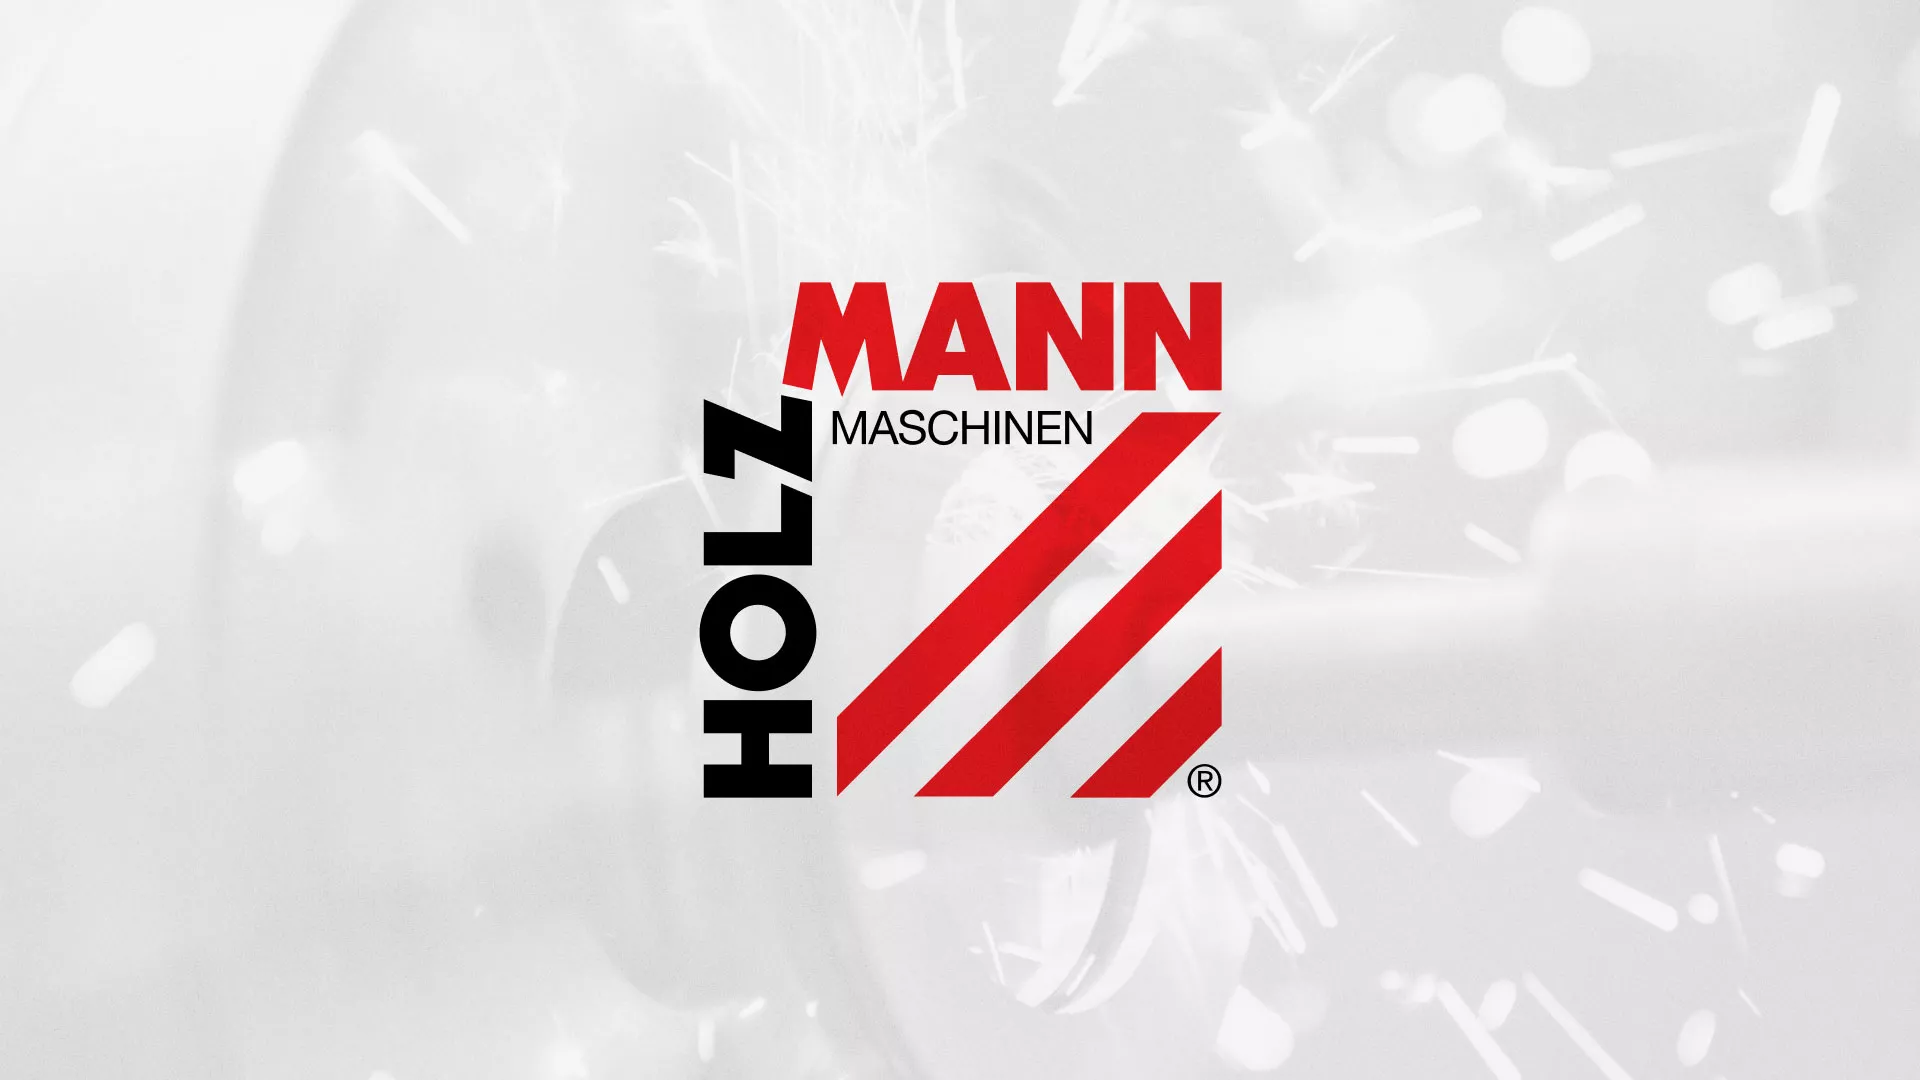 Создание сайта компании «HOLZMANN Maschinen GmbH» в Харабалях